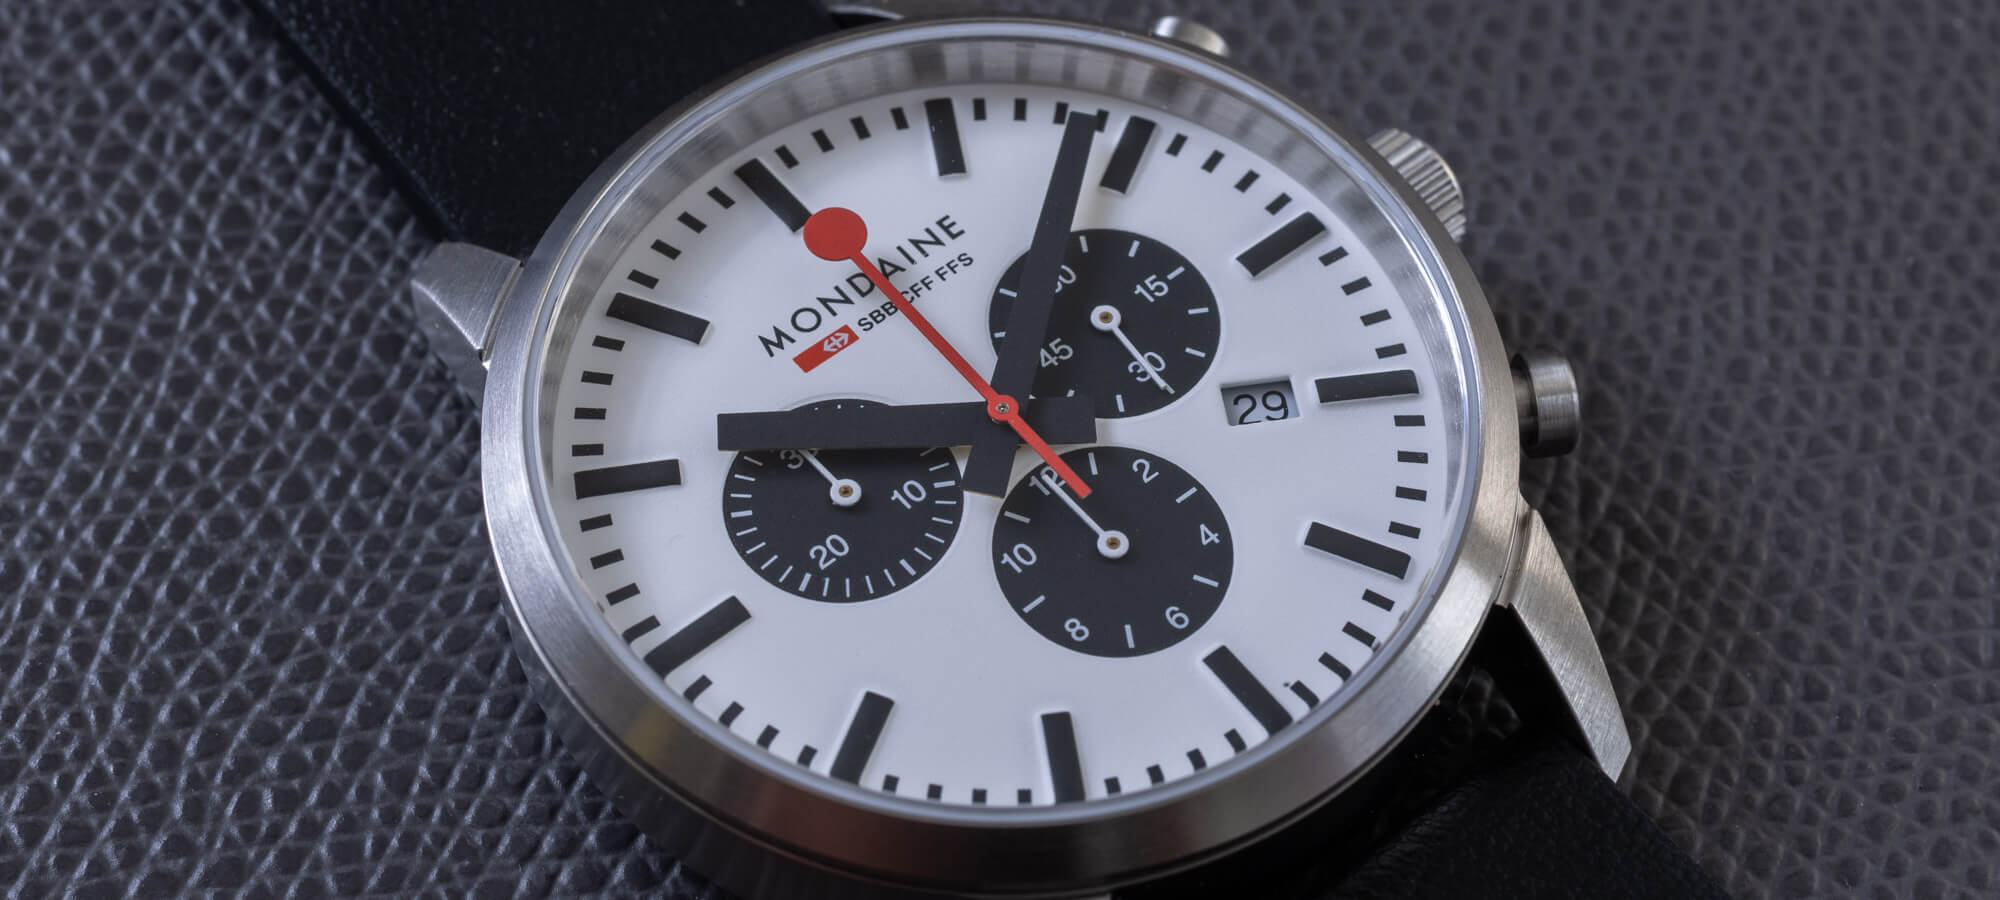 Hands-On: Mondaine Neo Chronograph 41mm Watch | aBlogtoWatch